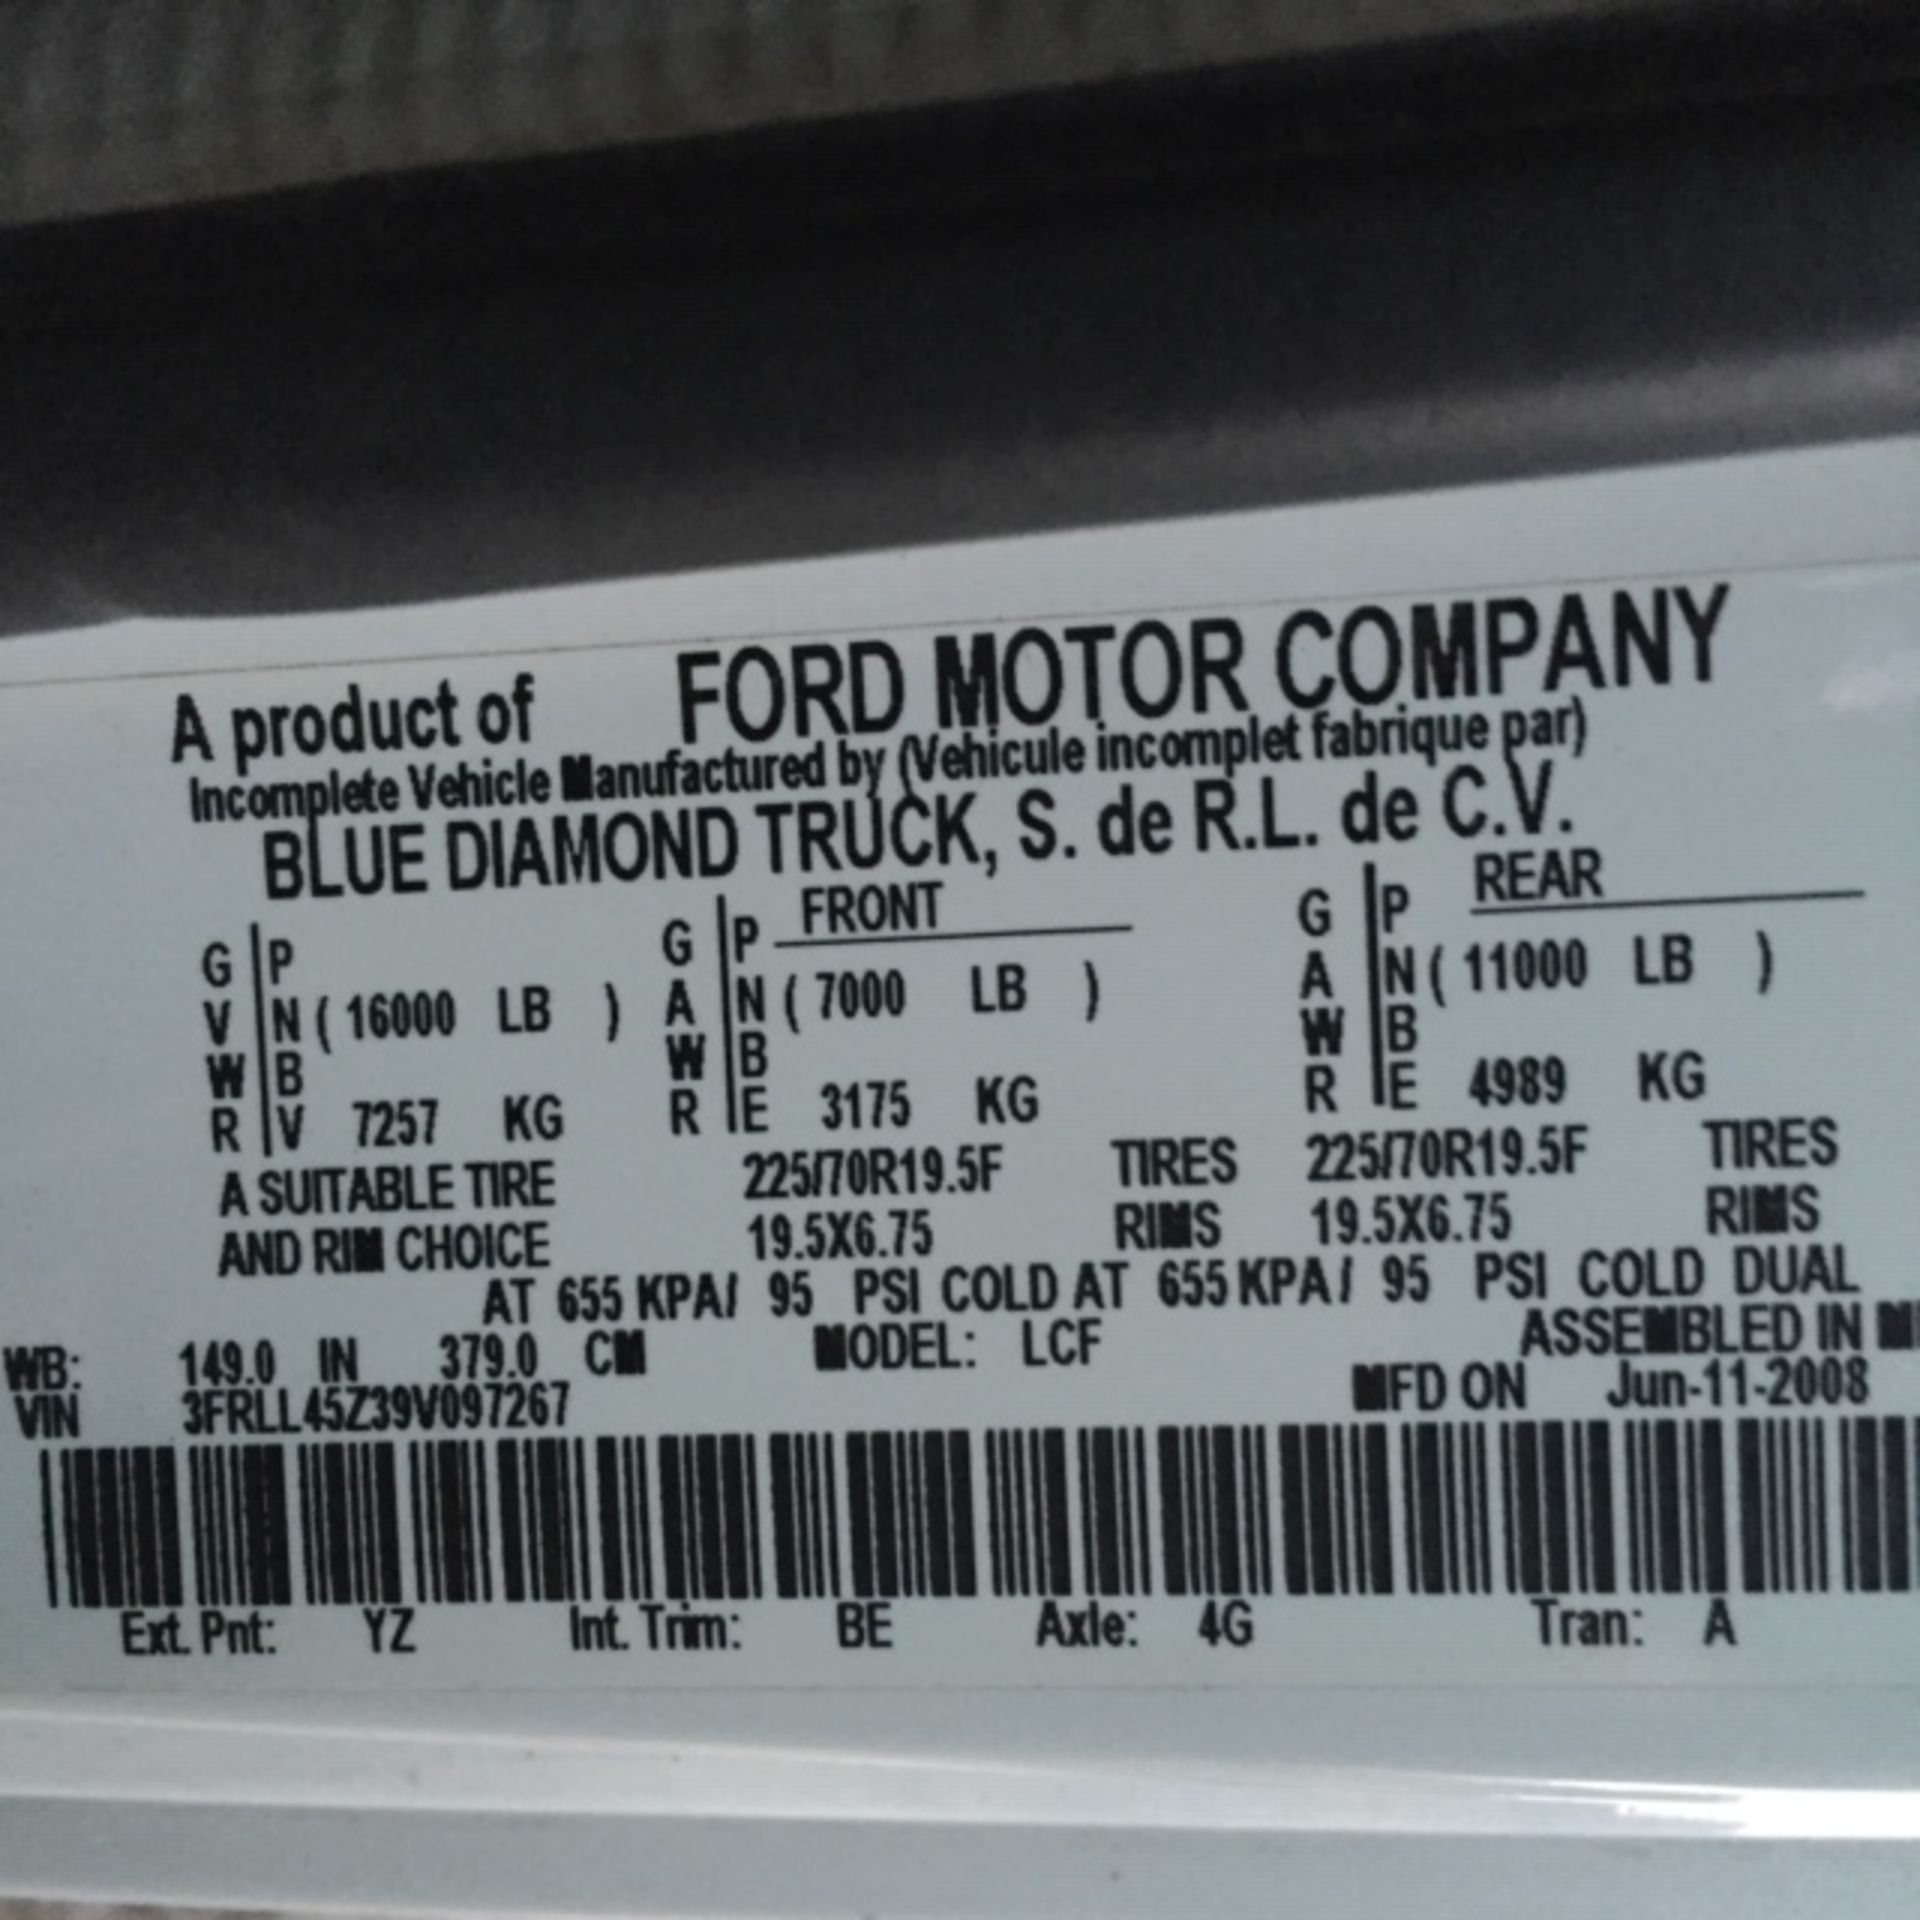 2009 Ford LCF Truck, 18 Ft Box, 4.5L V6 Power Stroke Turbo Diesel, Auto - Location: Toronto, Ontario - Image 6 of 9